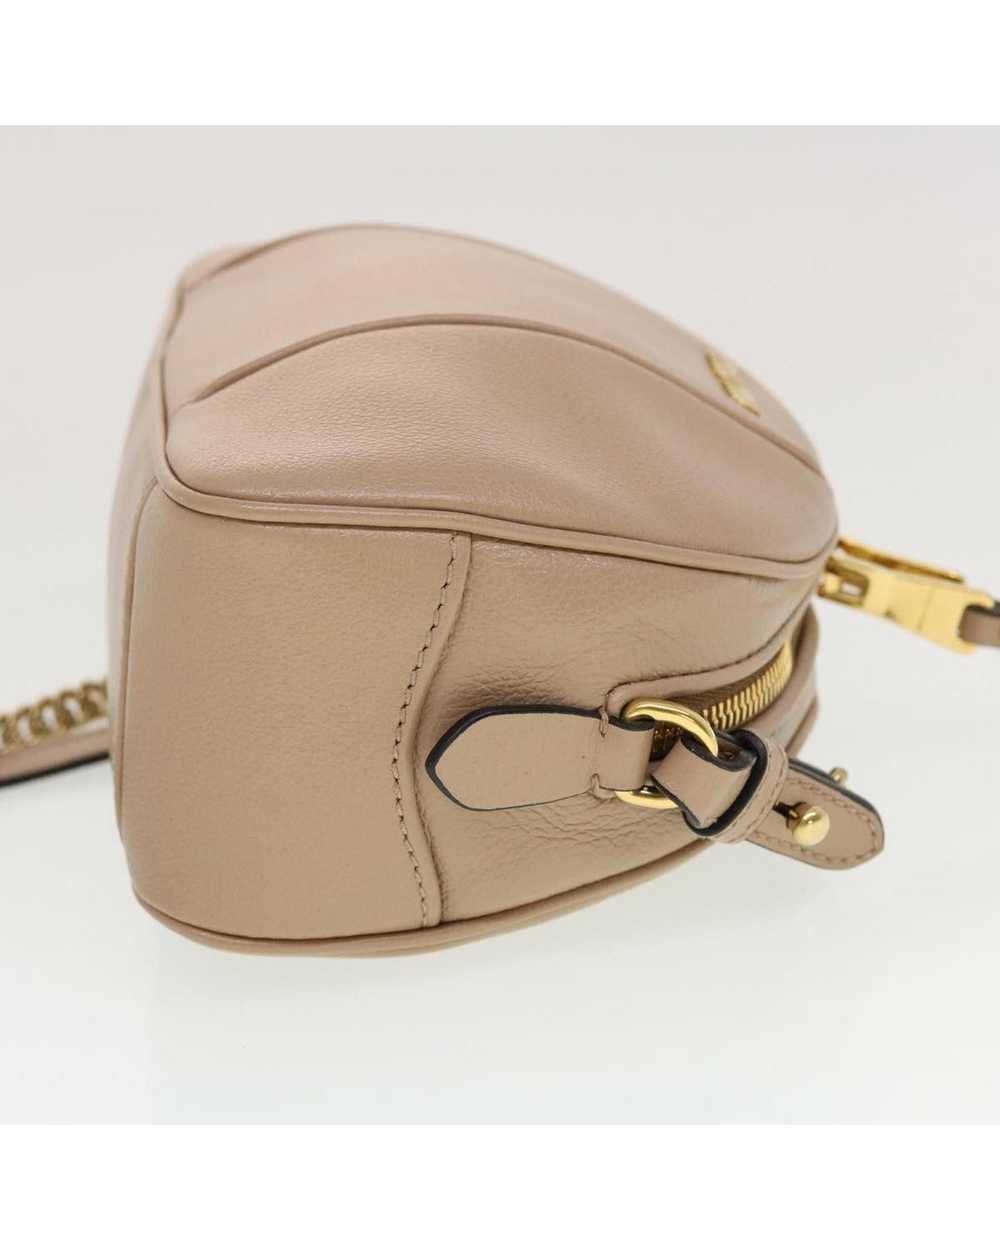 Miu Miu Chain Shoulder Bag Leather Beige Pink - image 4